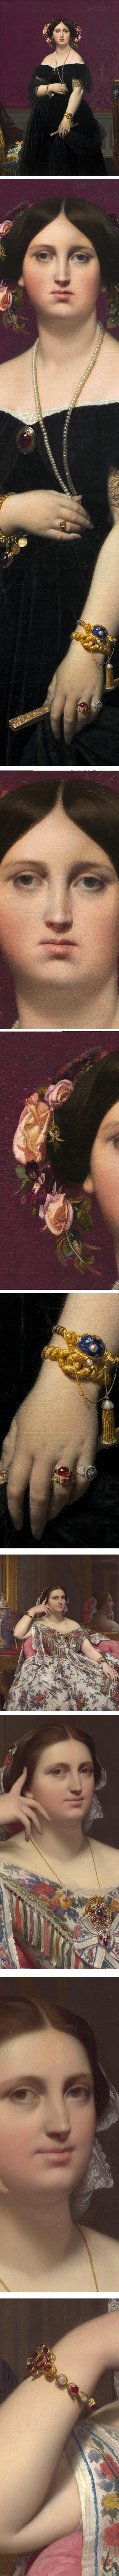 Madame Moitessier, Jean-Auguste-Dominique Ingres